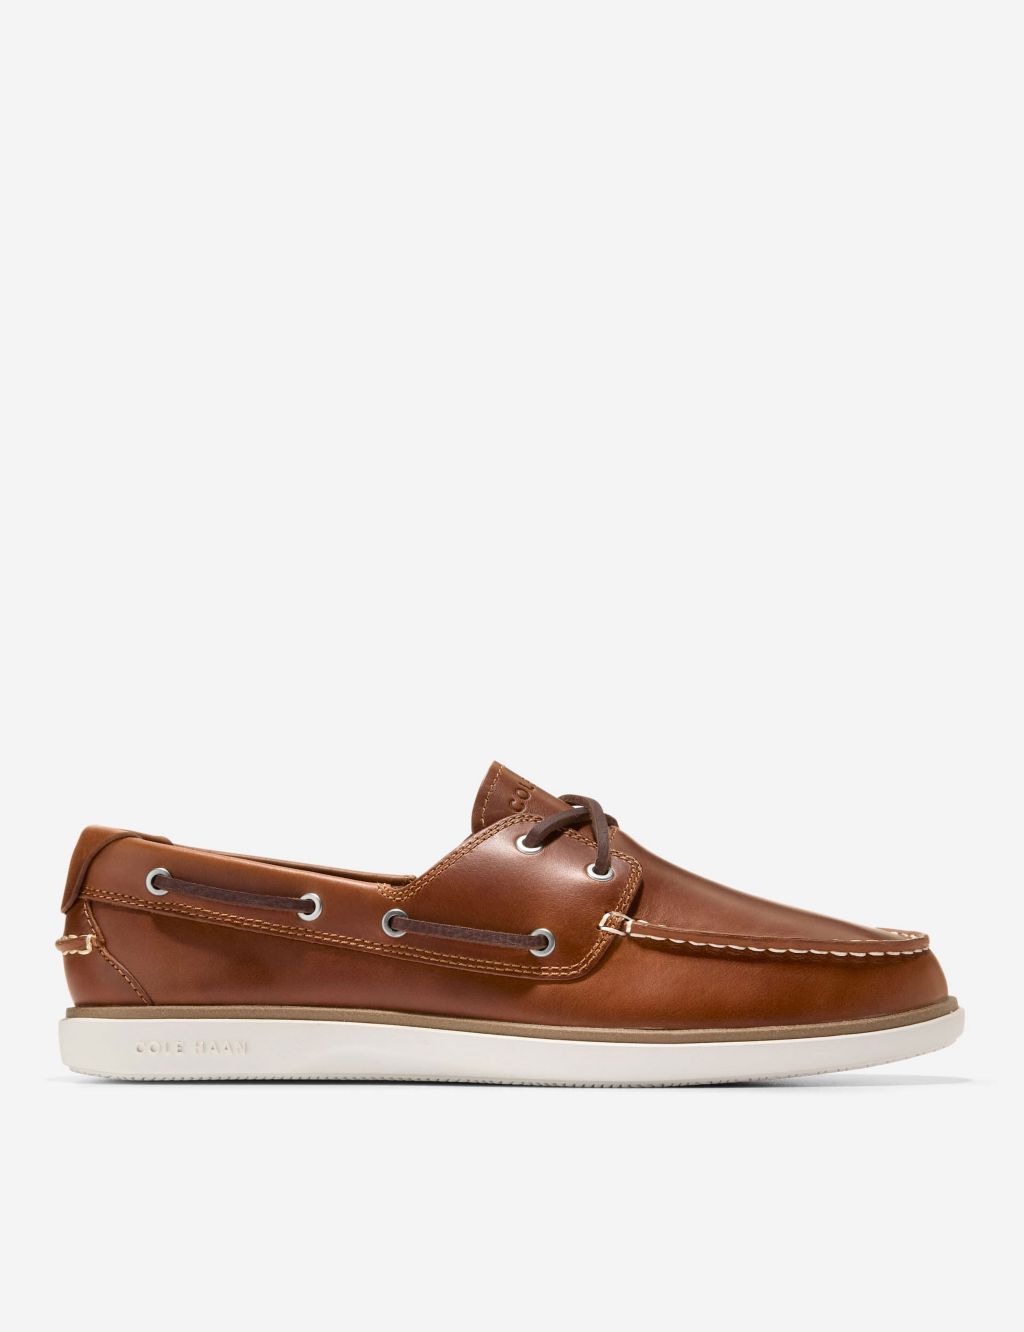 Leather Slip-On Grandpro Windward Boat Shoe